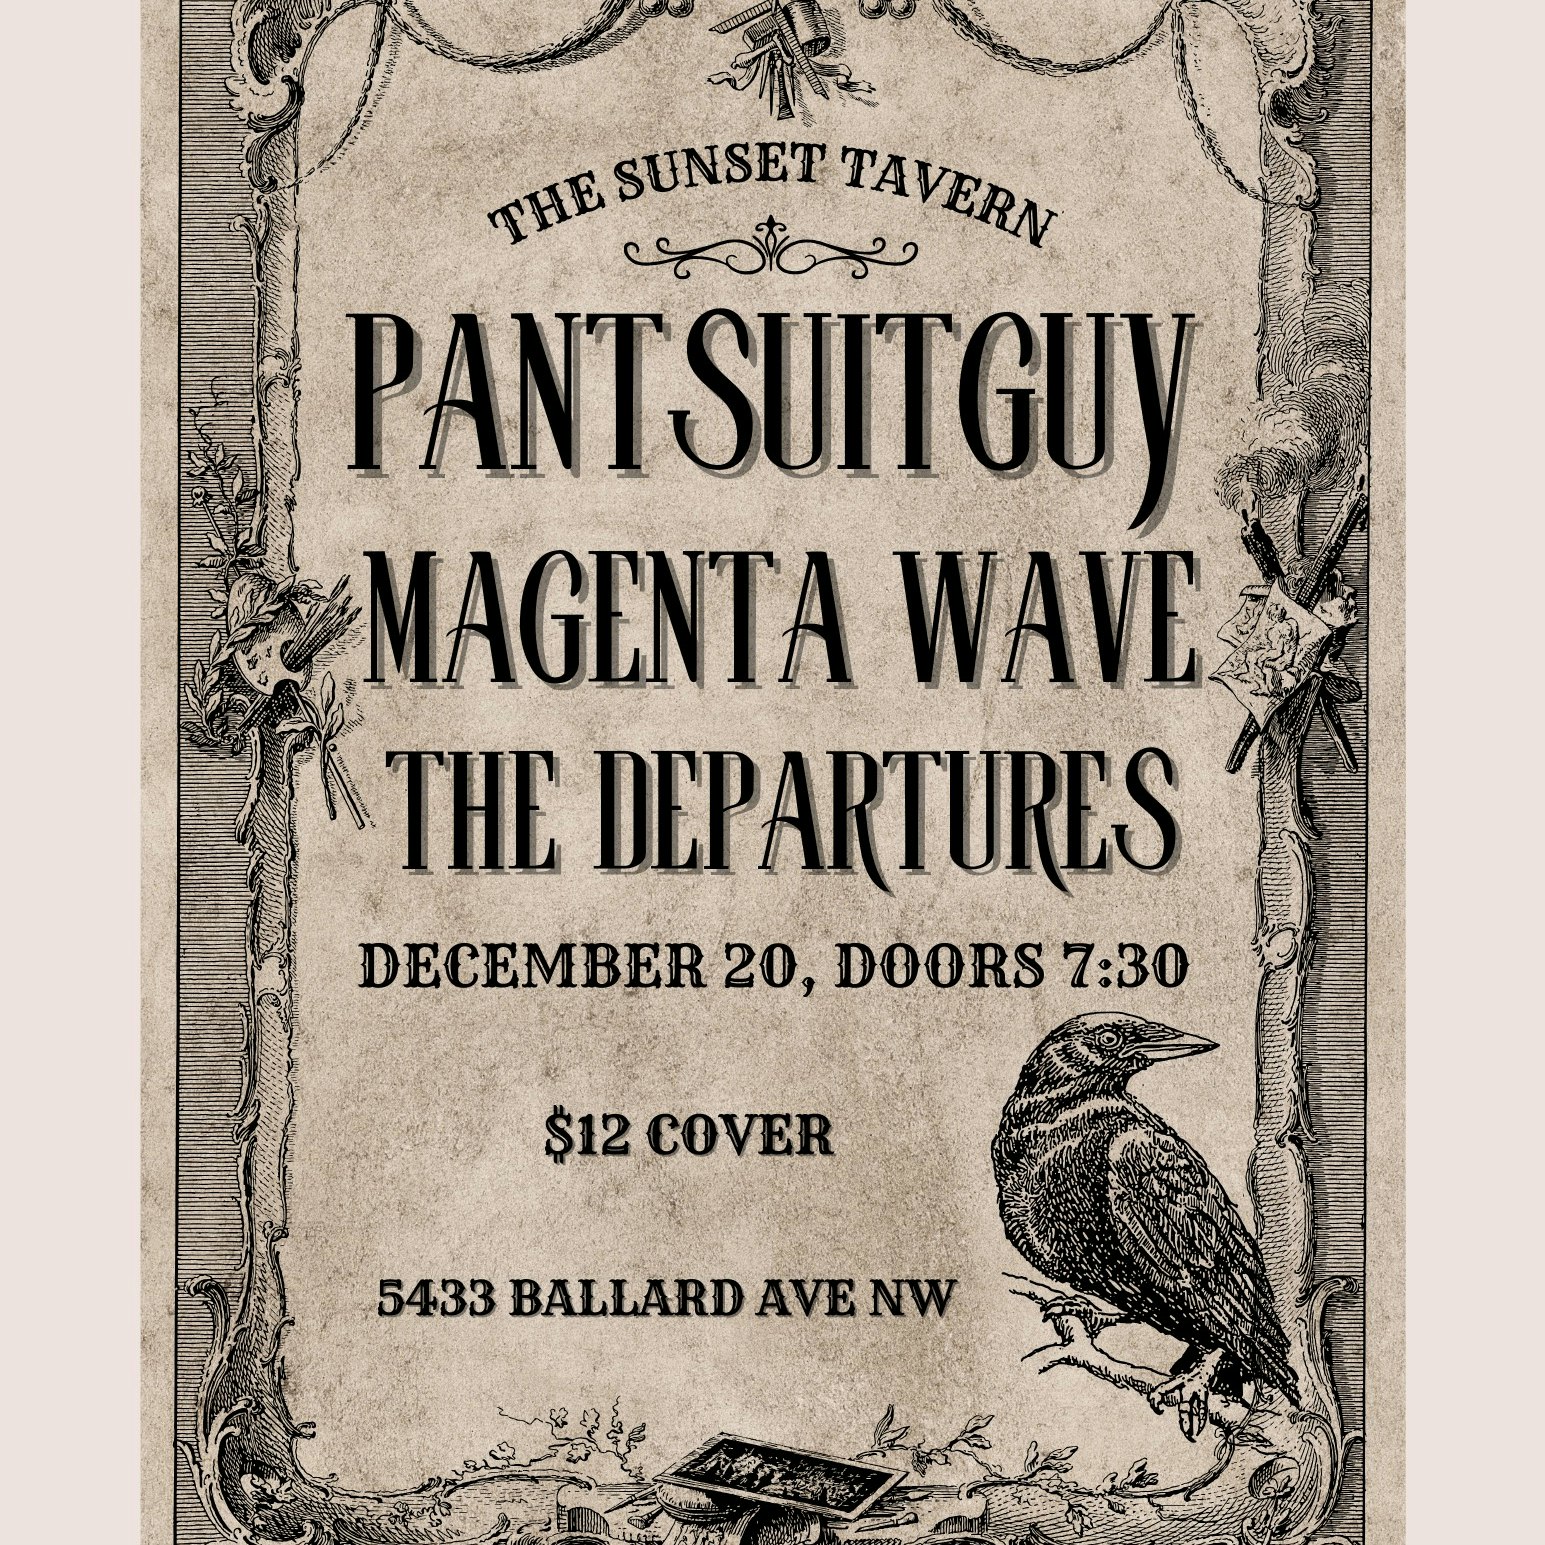 Pantsuitguy, Magenta Wave, The Departures